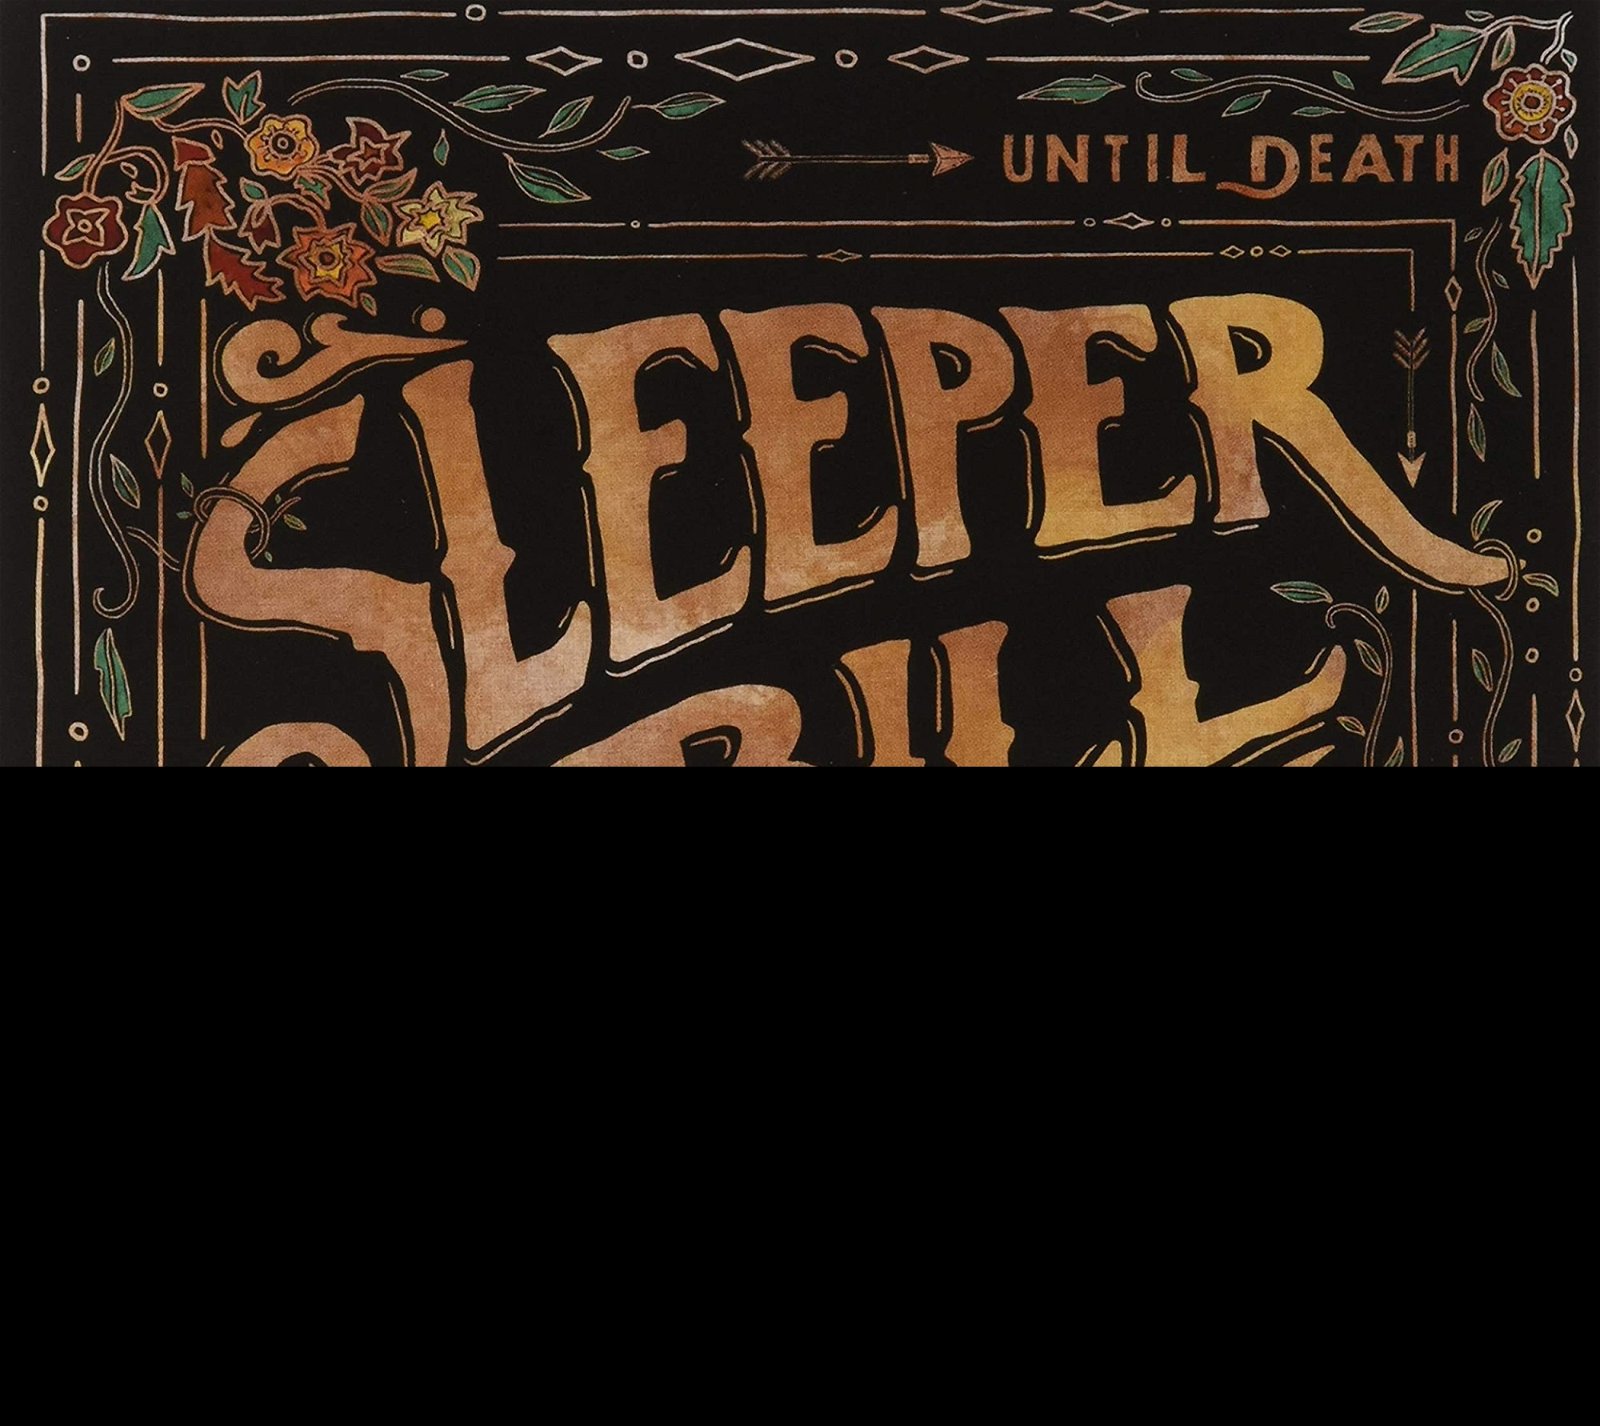 CD Shop - SLEEPER BILL UNTIL DEATH